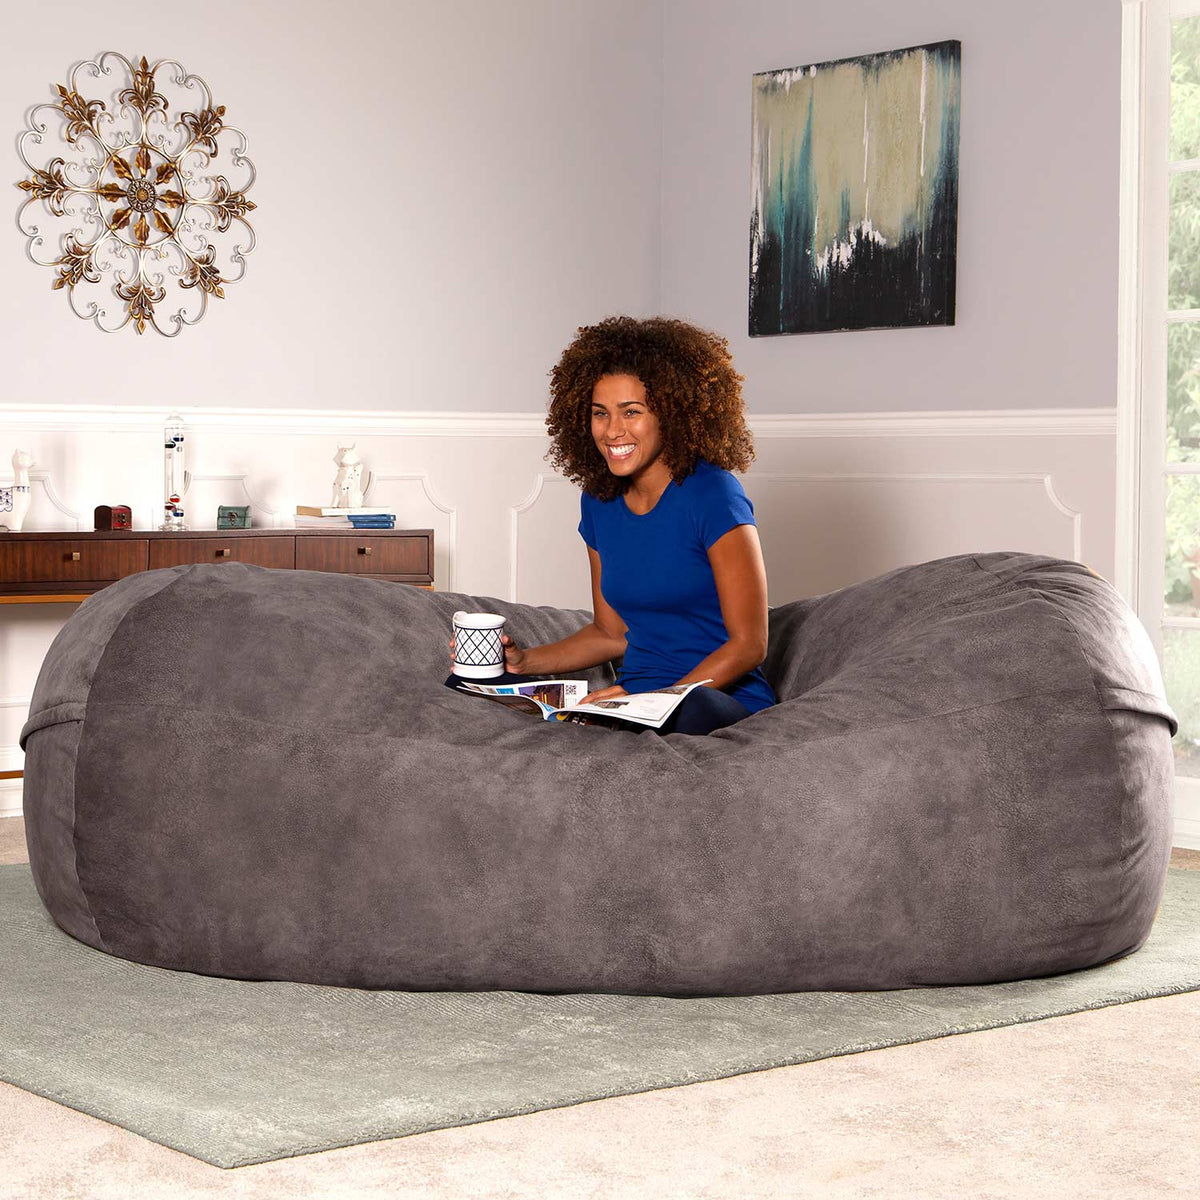 Jaxx® Lounger 7ft. Giant Bean Bag Couch